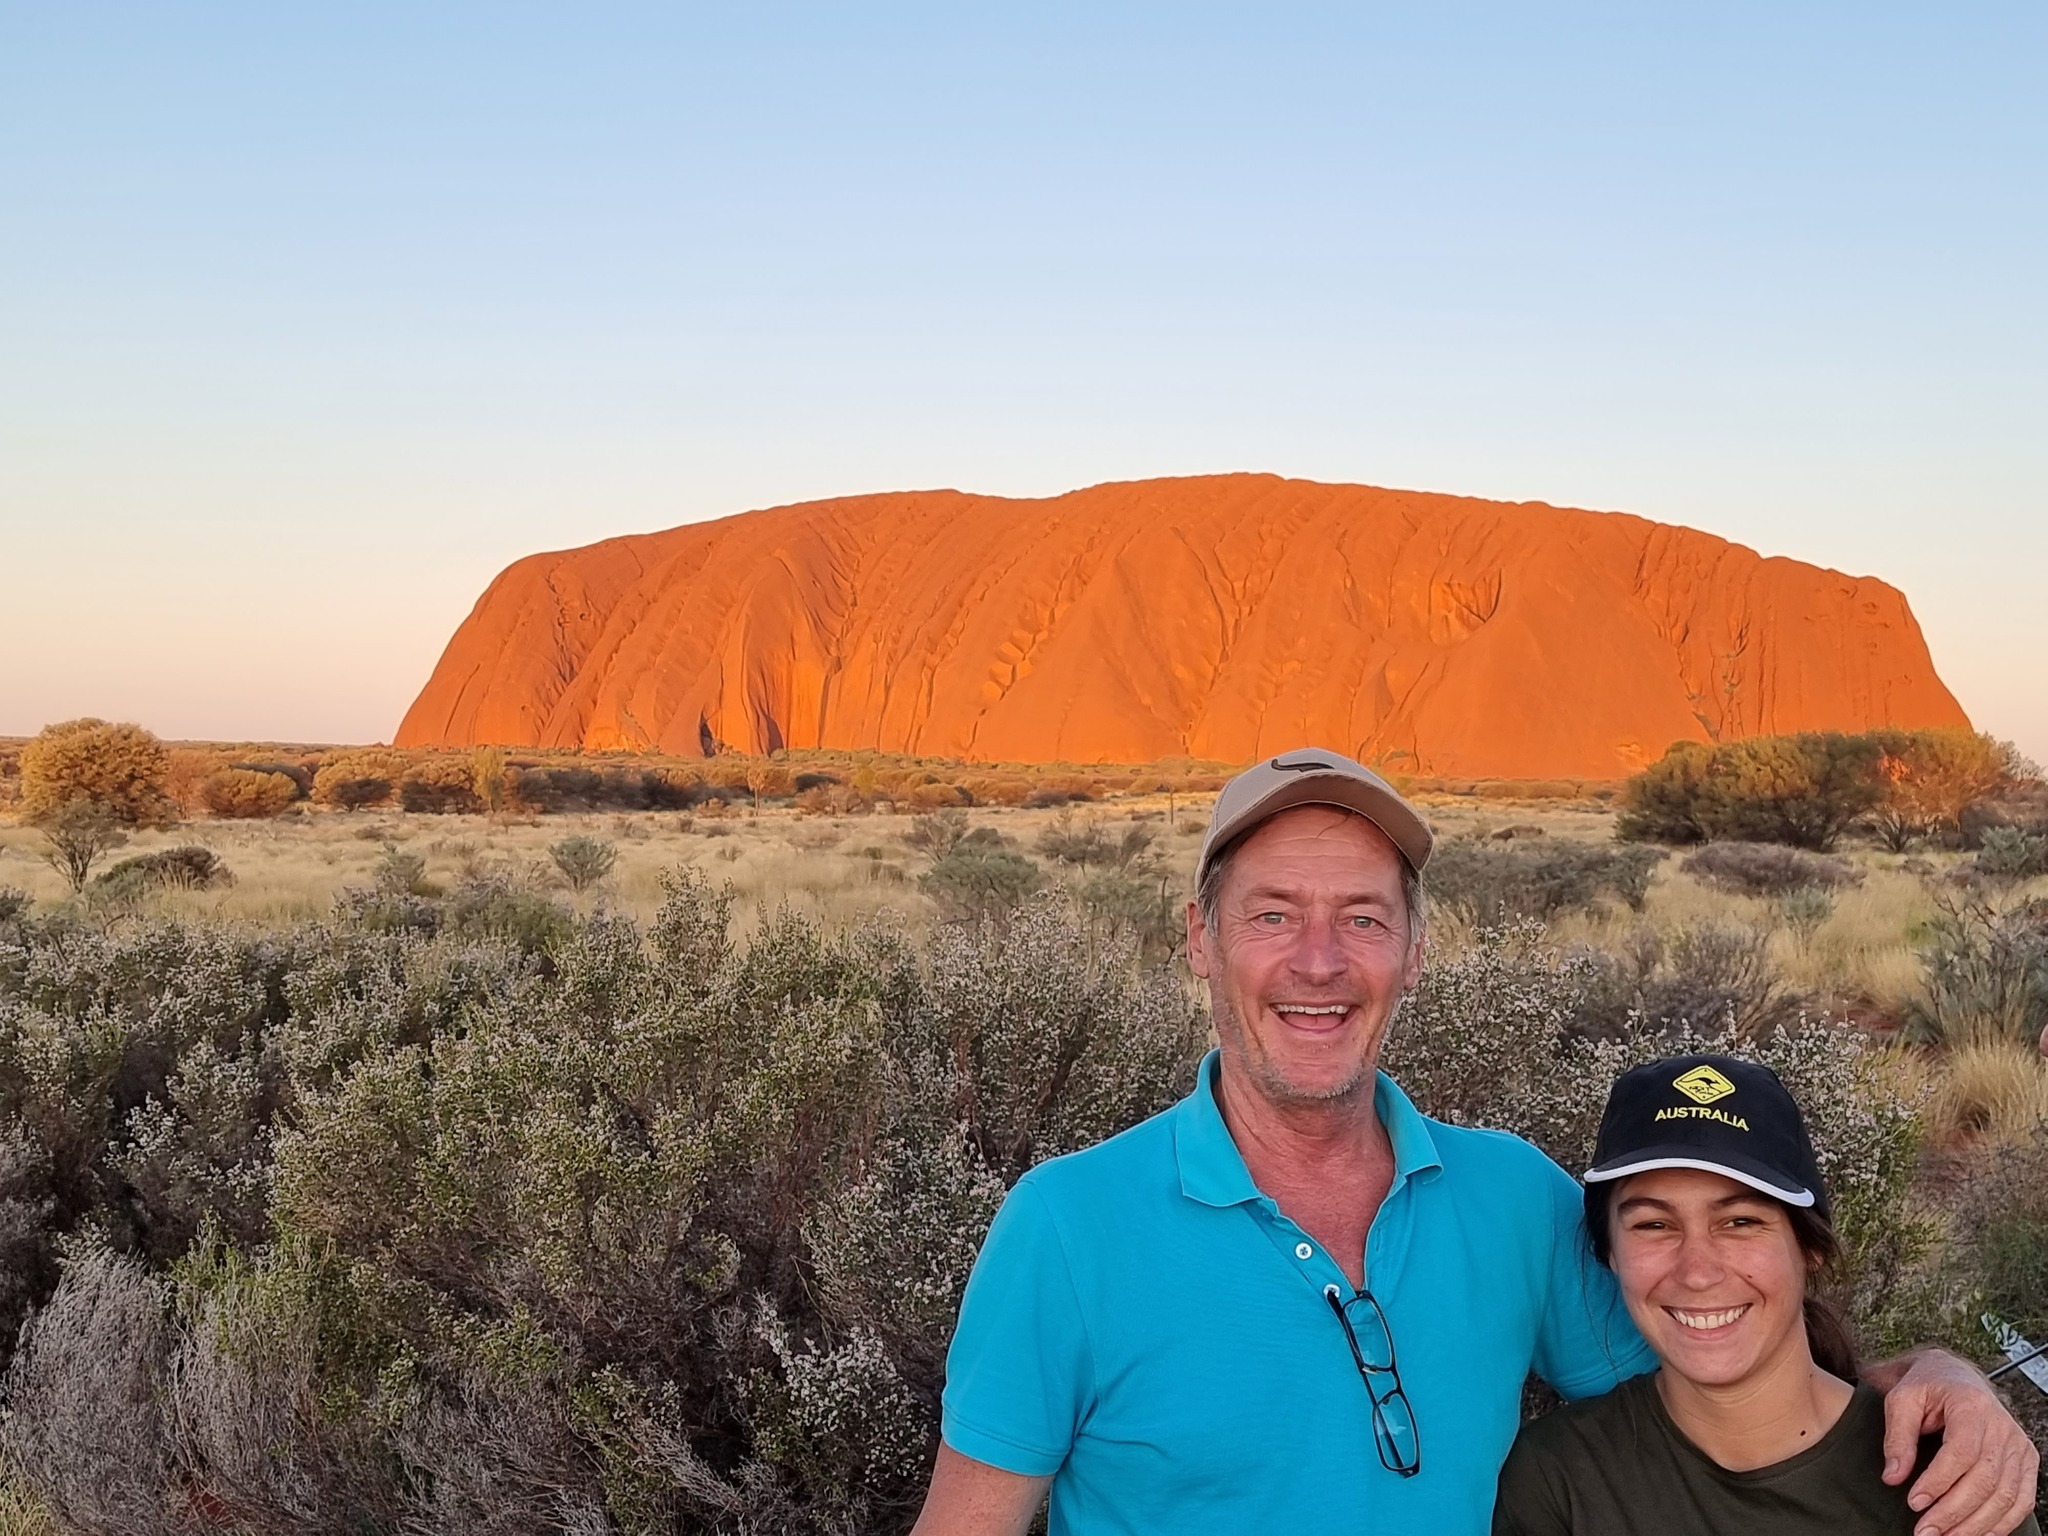 Mark and Marjorie Jensen standing together in Australia